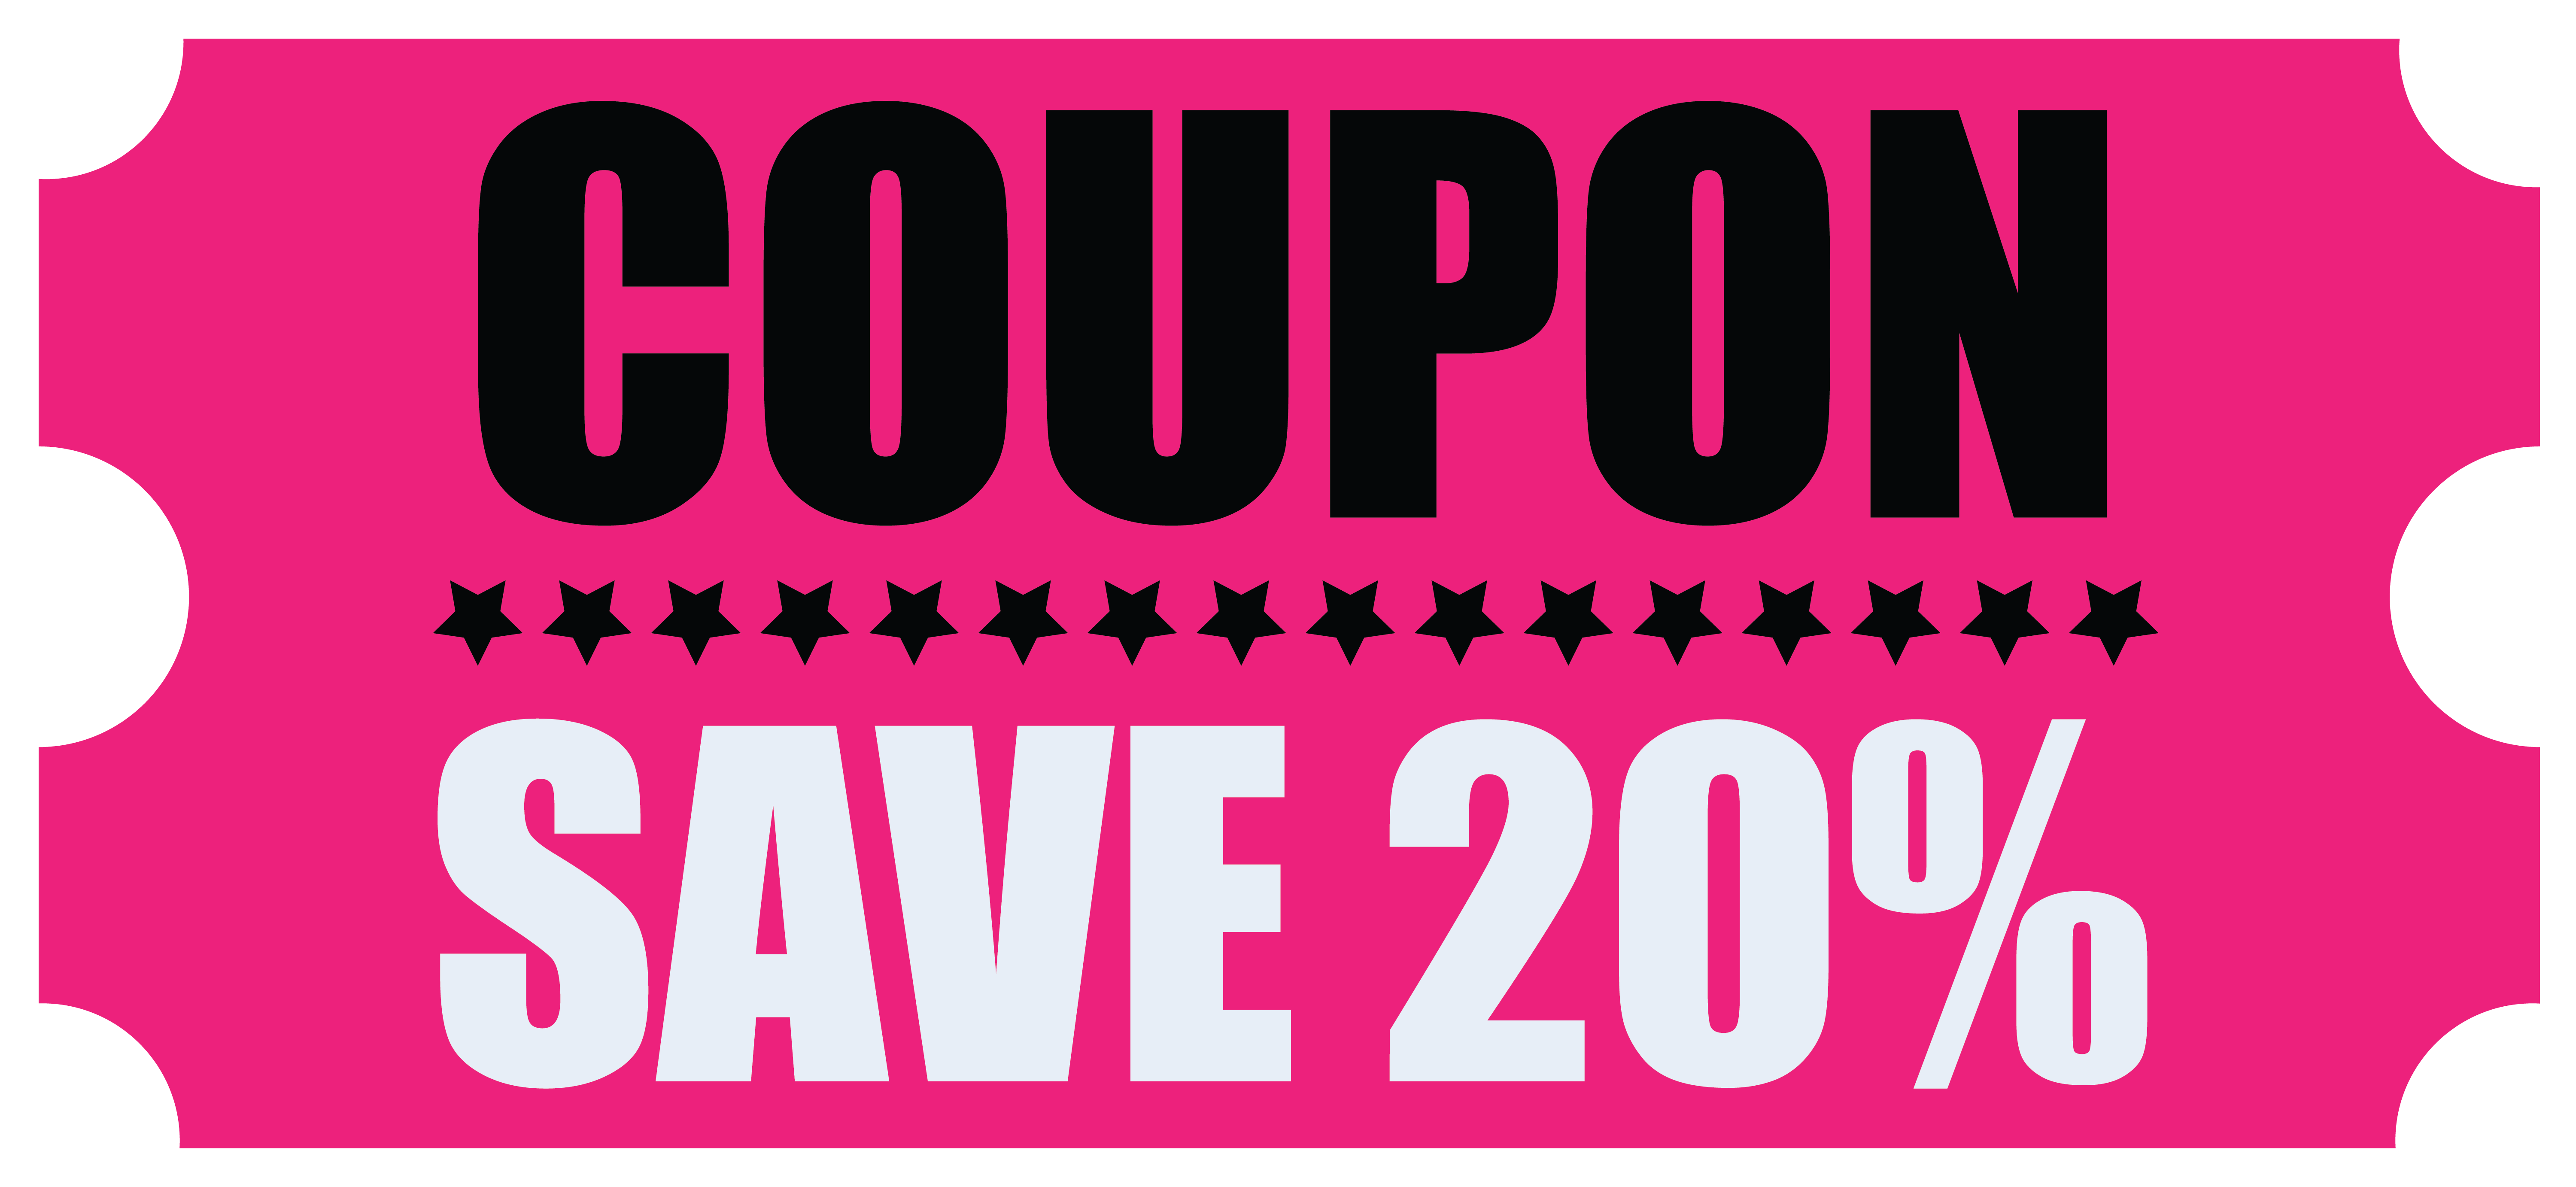 free clipart coupon design - photo #14